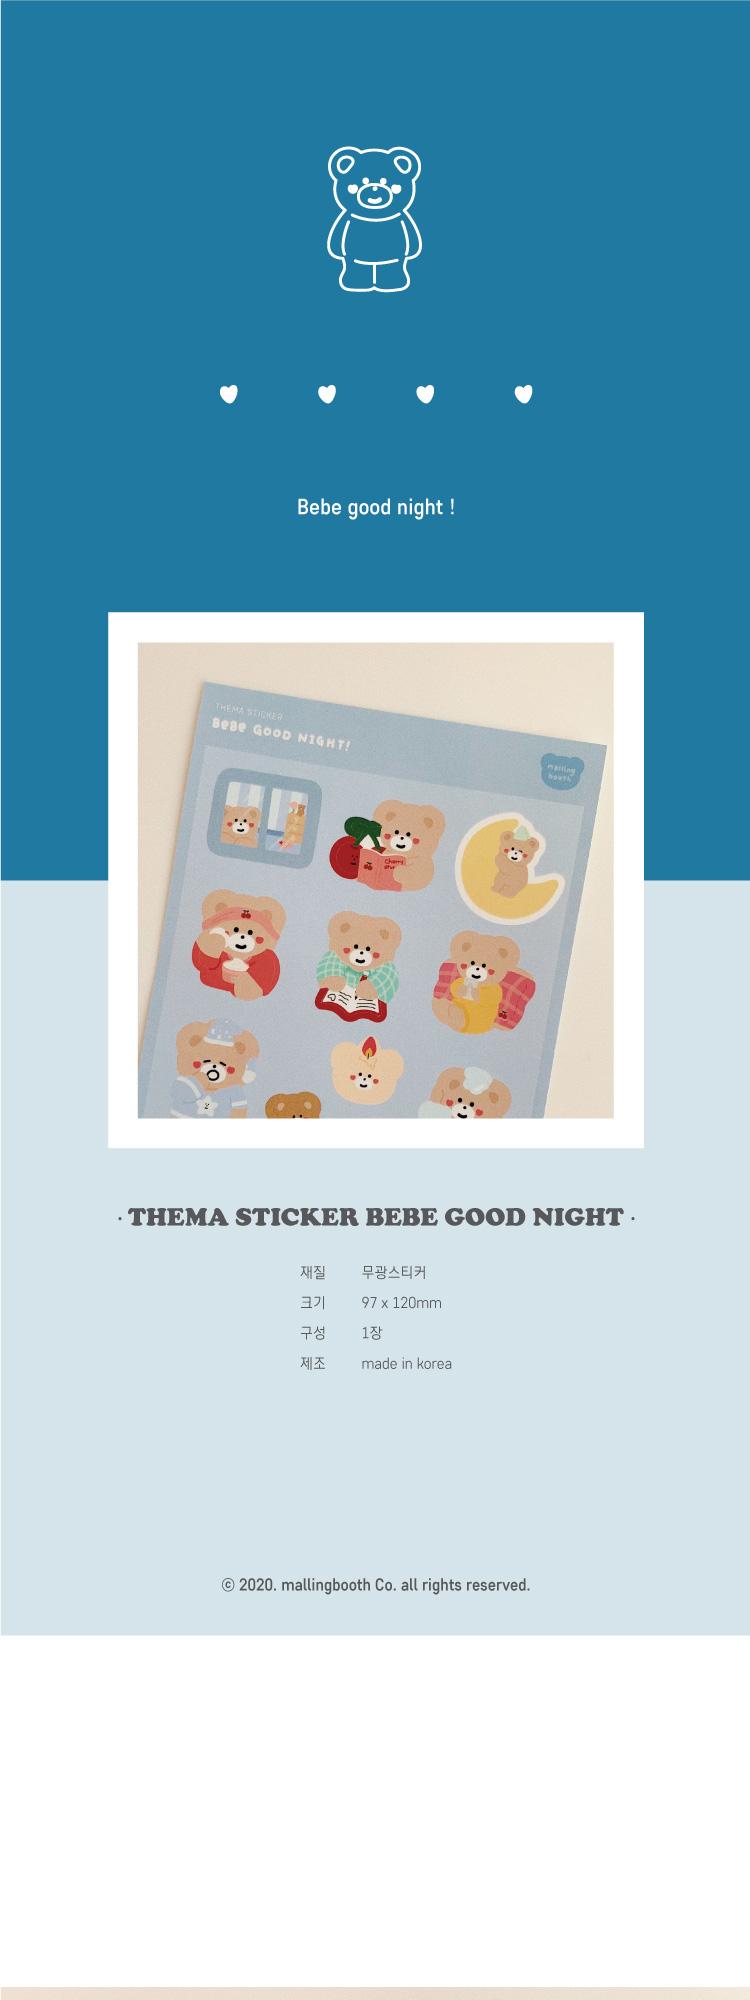 [HOLIDAY TIME] Theme Sticker bebe Goodnight